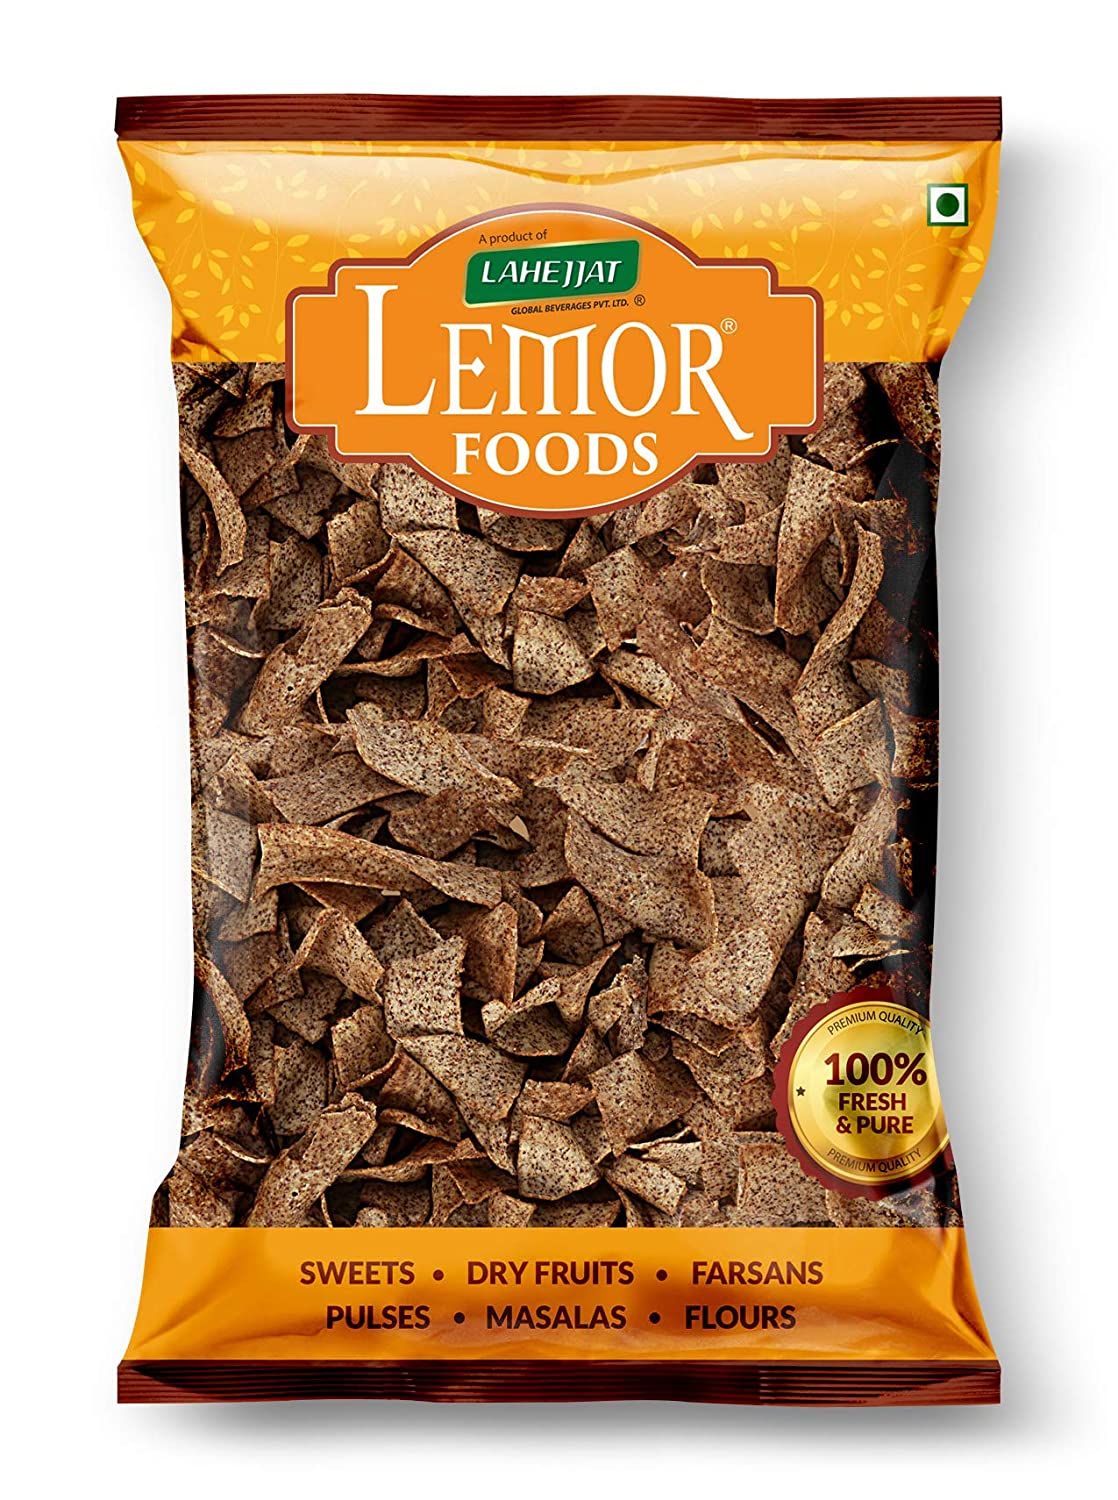 Lemor Roasted Chips Image